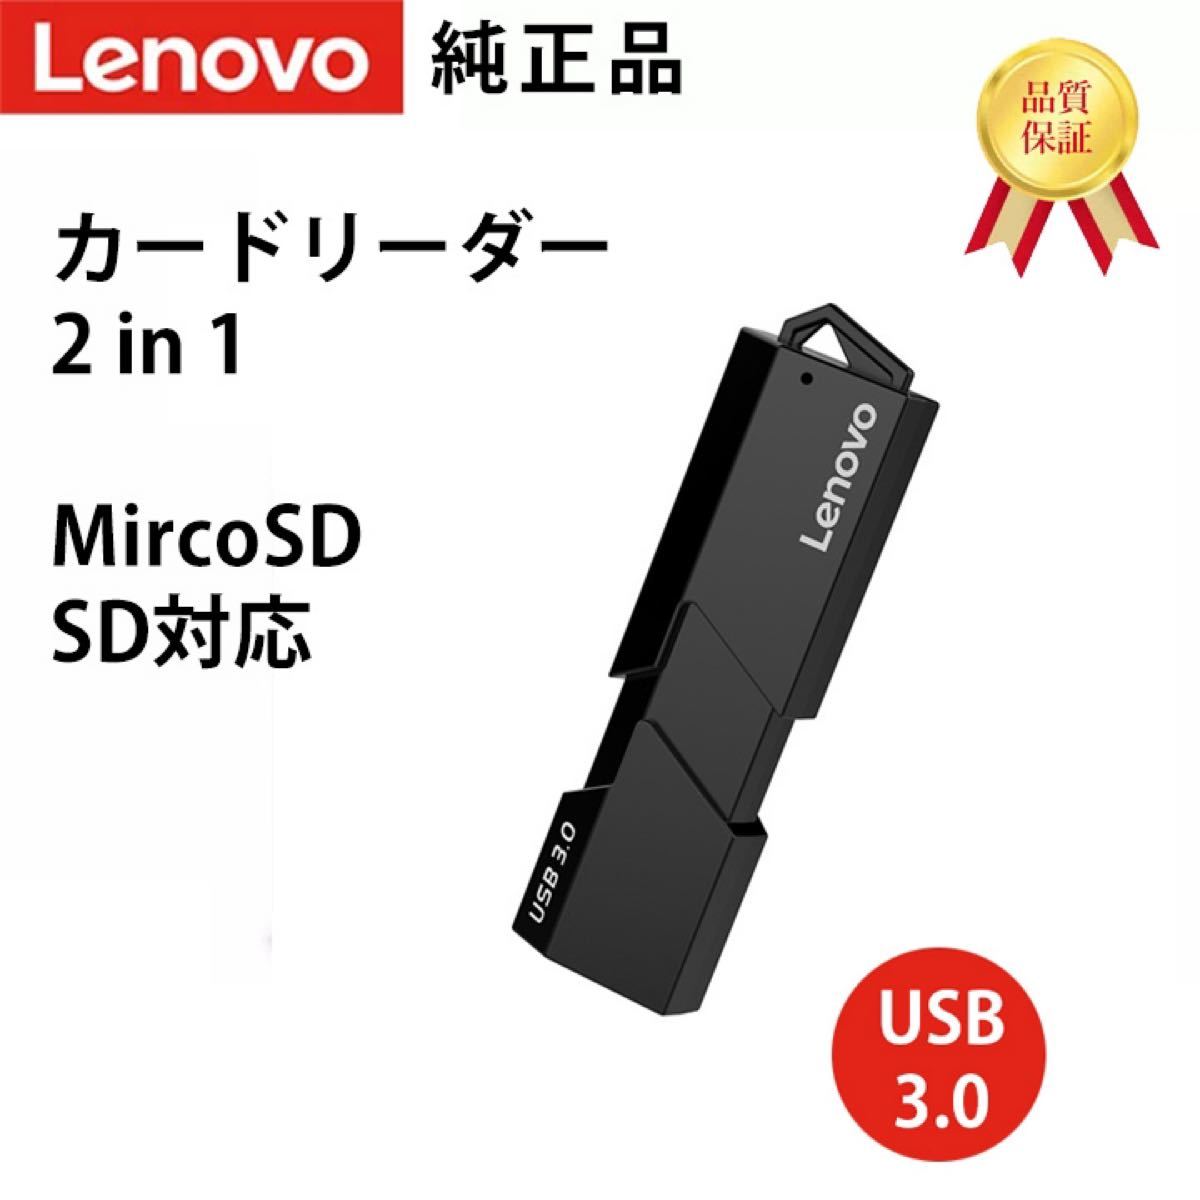 Lenovo純正品 USB3.0 カードリーダー MicroSD SD